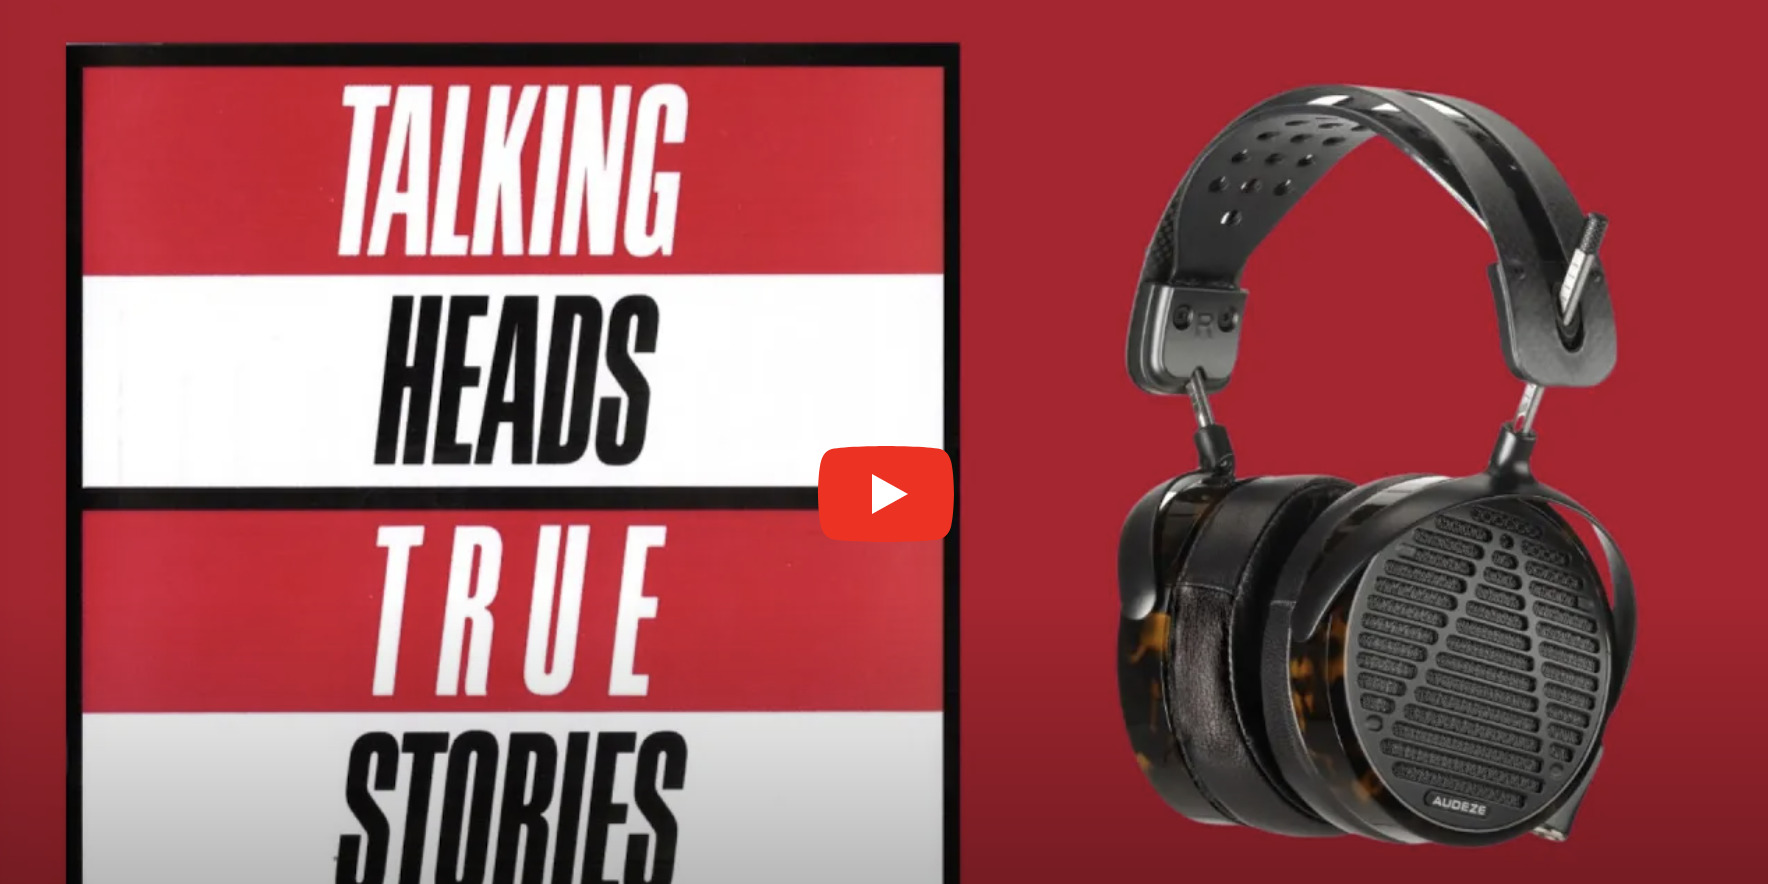 Jerry Harrison of TALKING HEADS Mixing & Mastering w/ Audeze Headphones